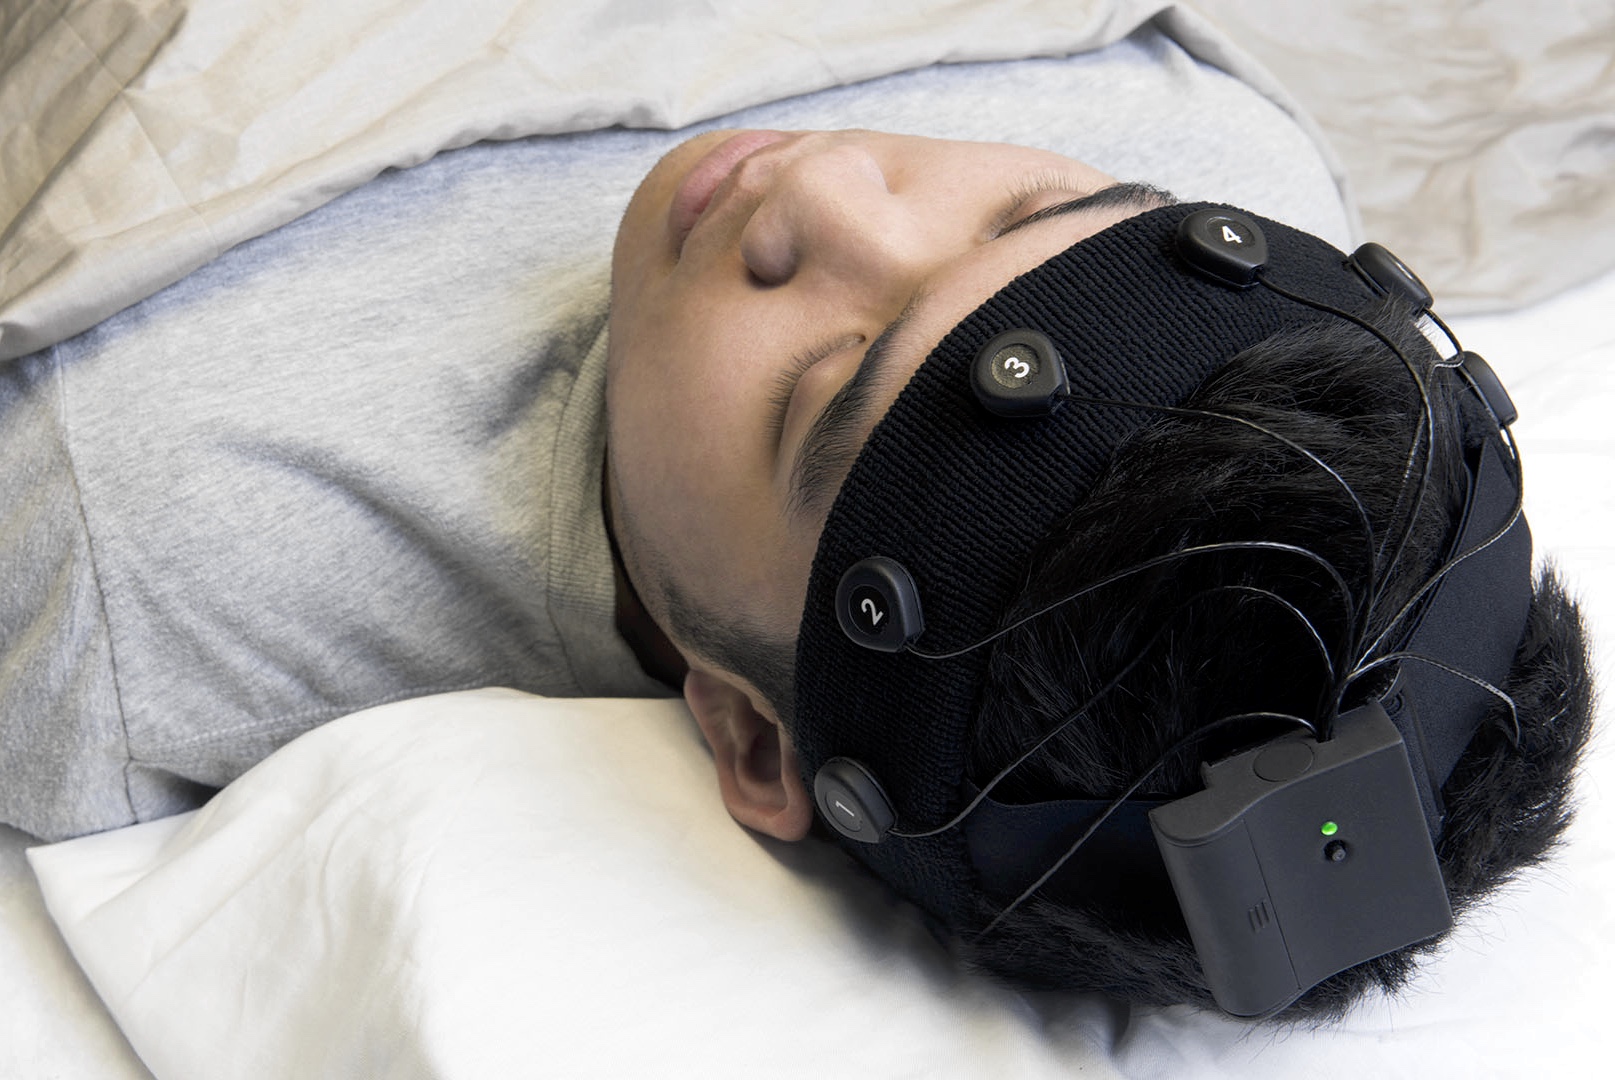 Шлем для ээг. ЭЭГ видеомониторинг. Шлем для сна. Электроэнцефалография сна. Видеомониторинг головного мозга.